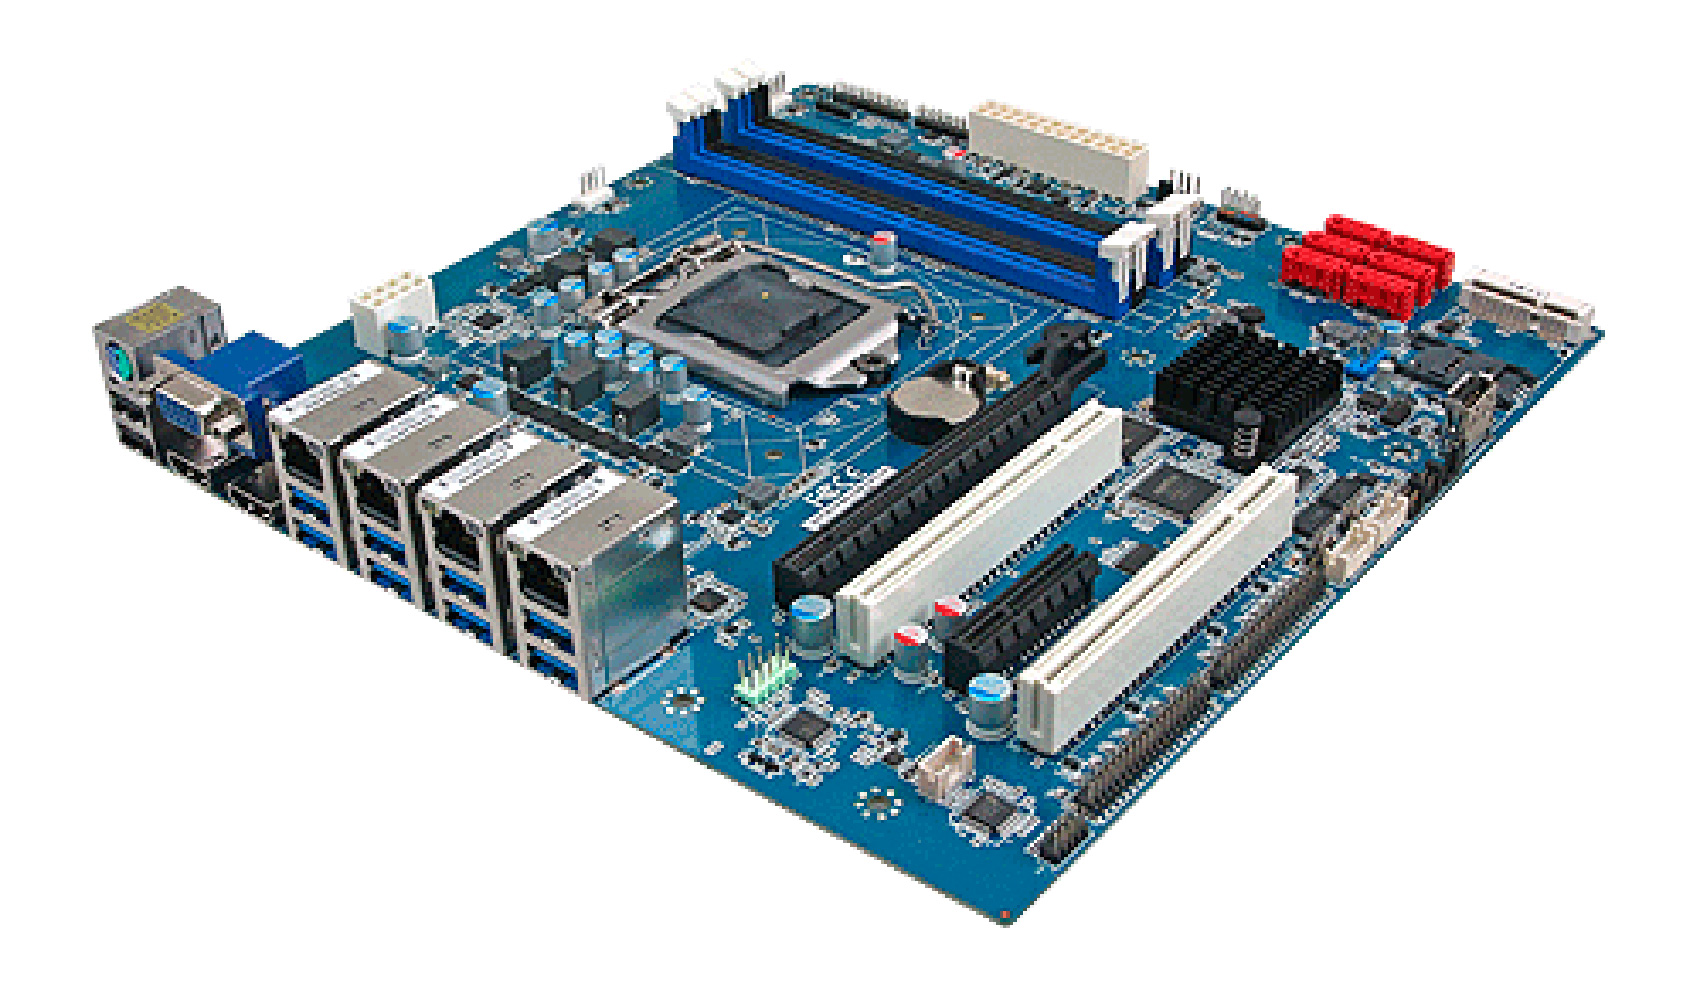 Placa base ATX industrial con procesadores Intel 12ª gen. para proyectos  edge AIoT - Anatronic S.A